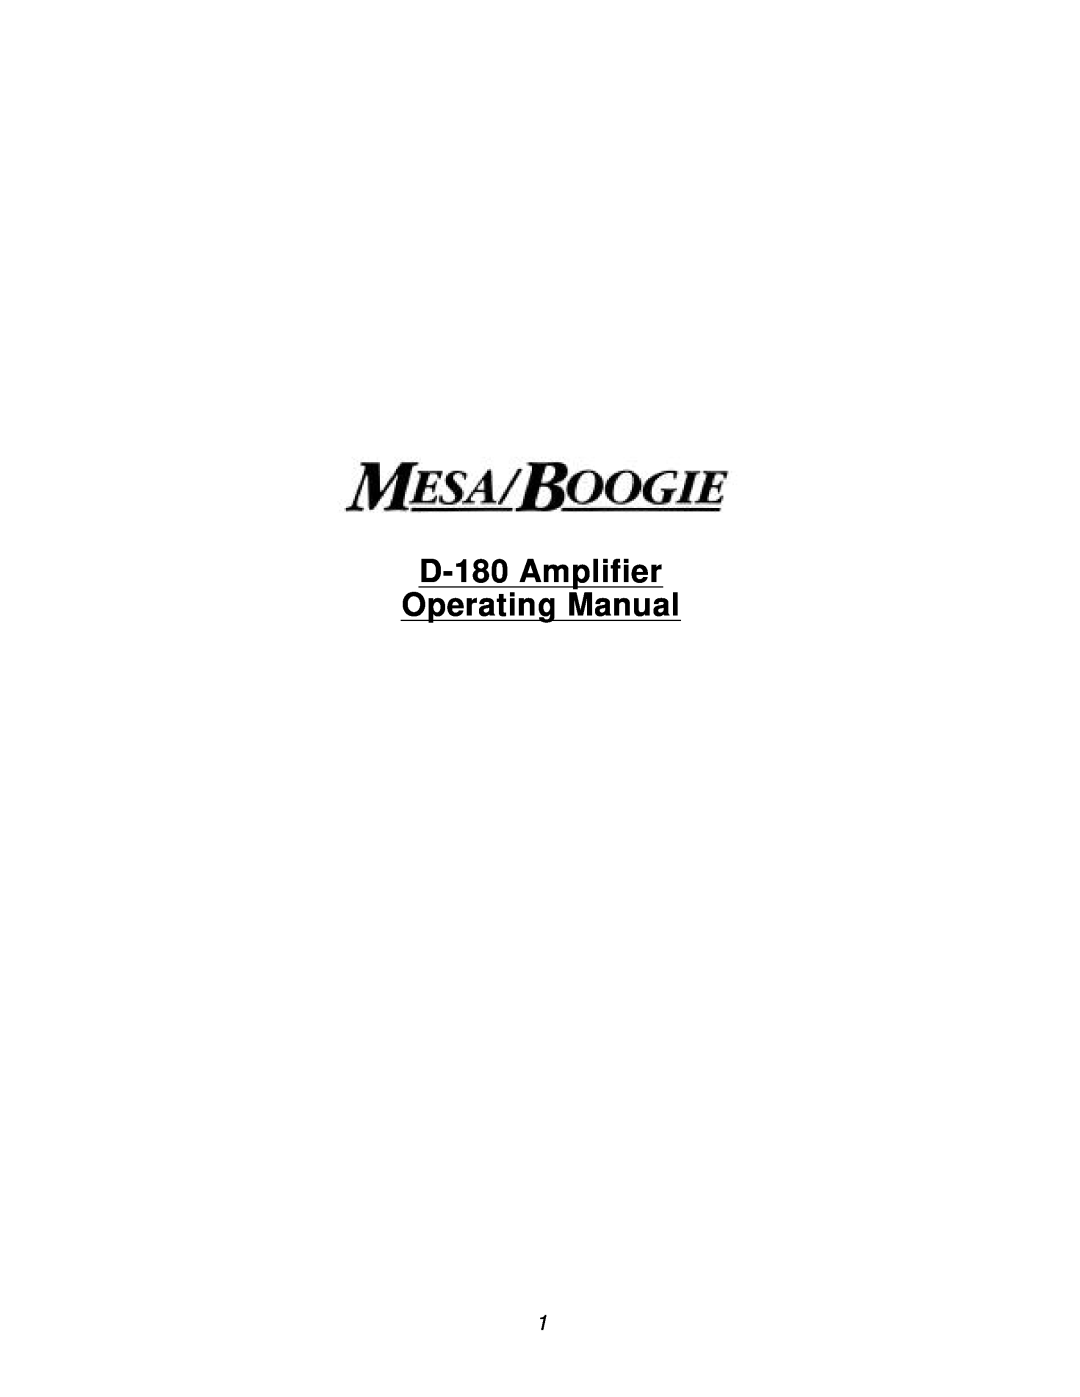 Mesa/Boogie manual D-180Amplifier Operating Manual 